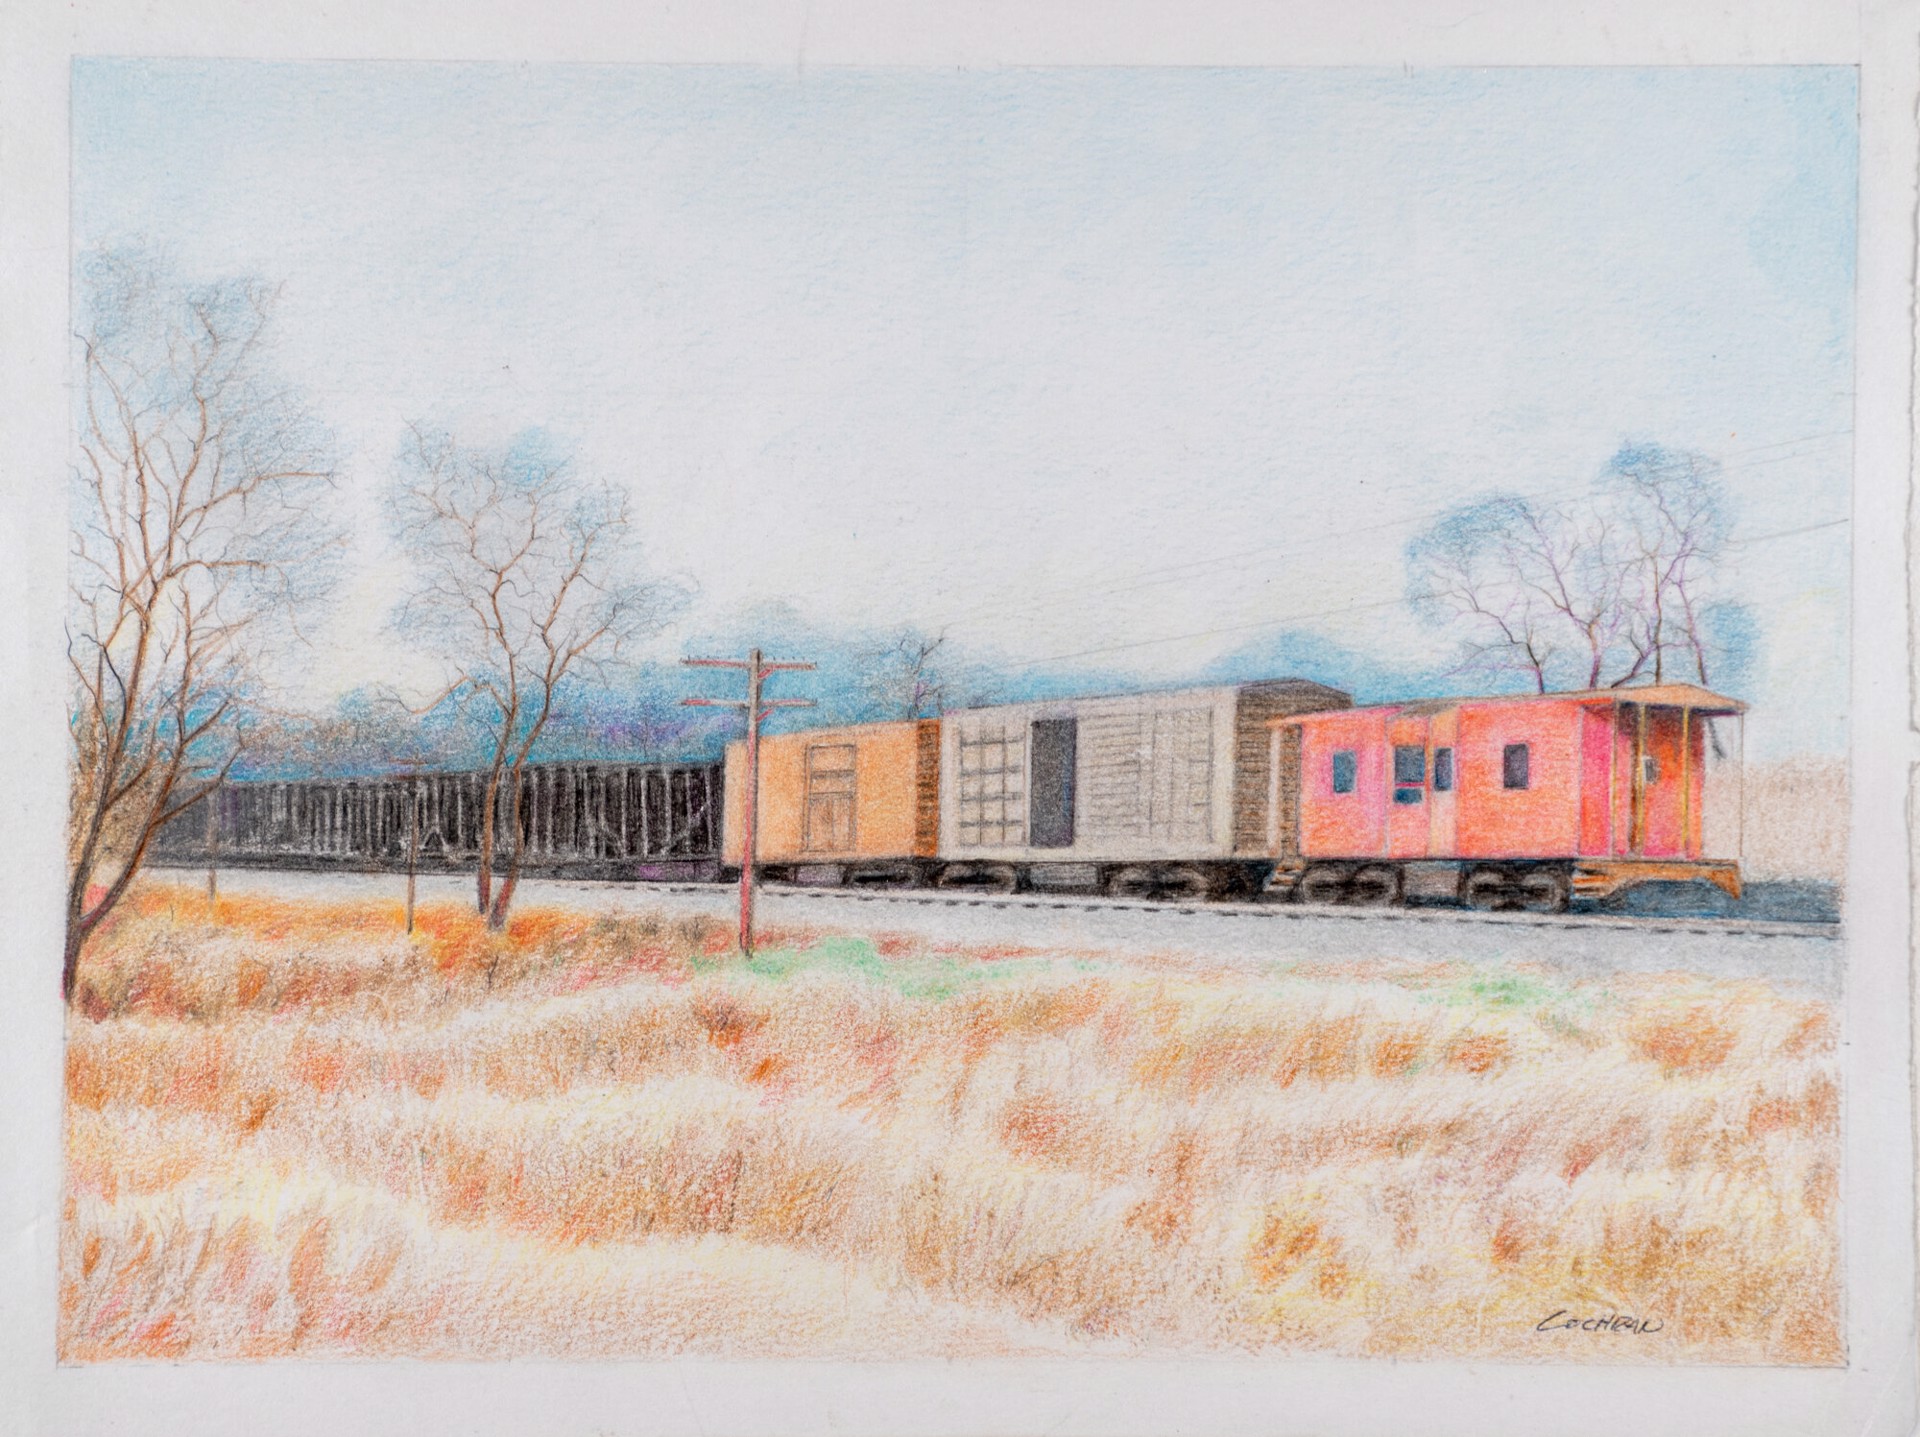 Train by D. Wayne Cochran